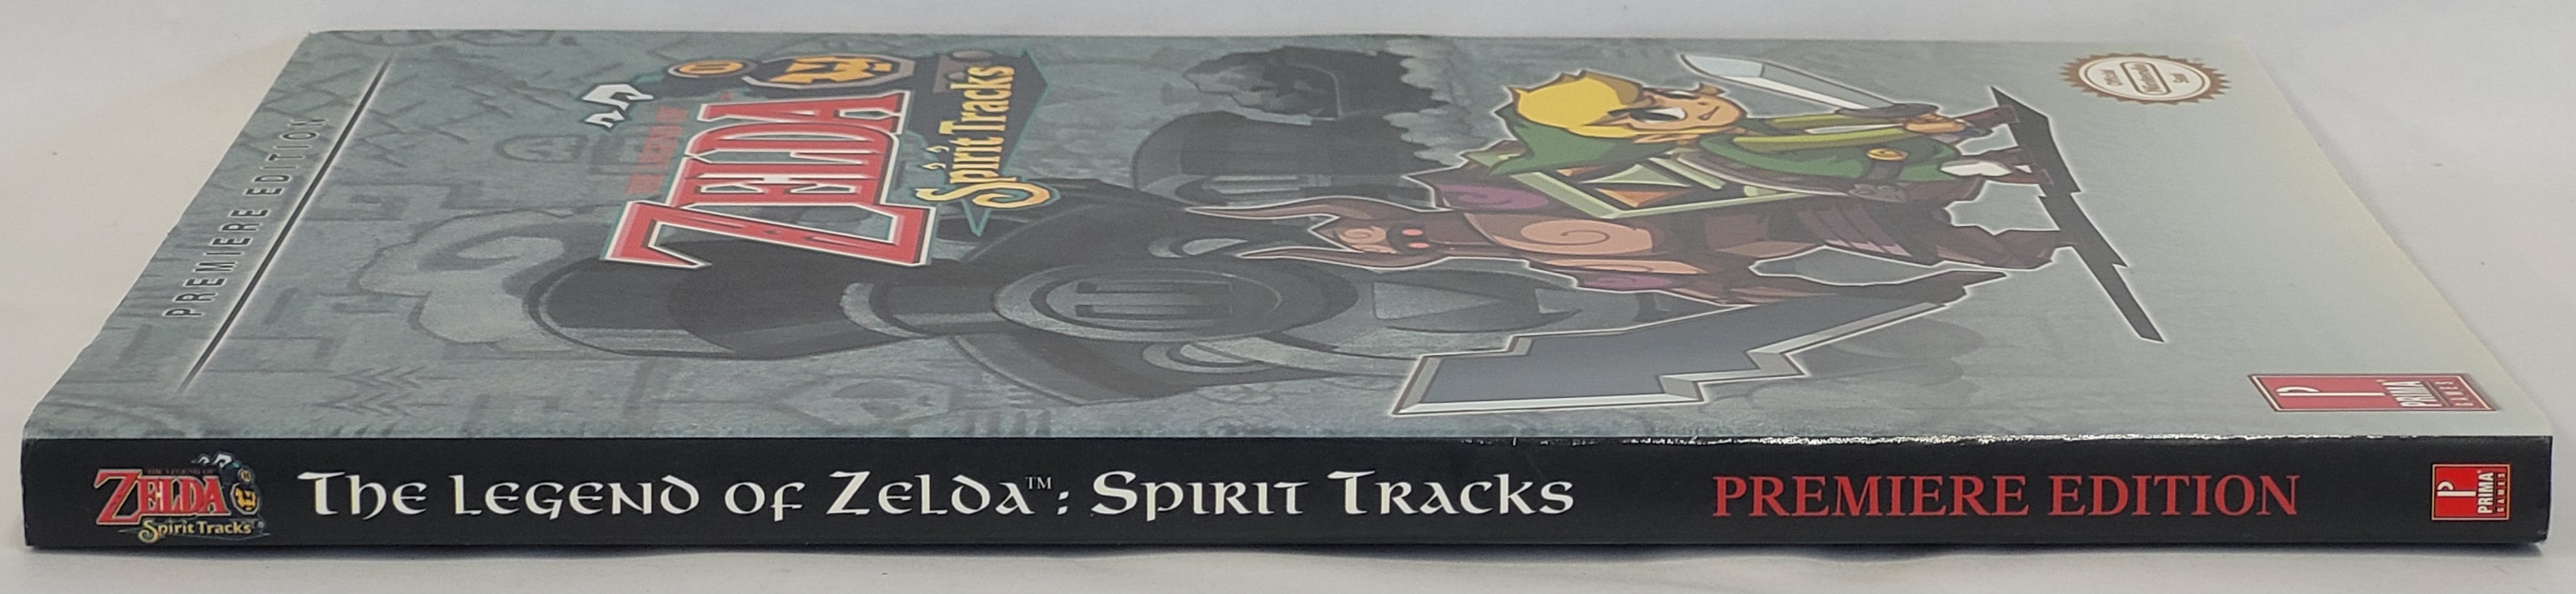 The Legend of Zelda Spirit Tracks Premiere Edition Game Guide 